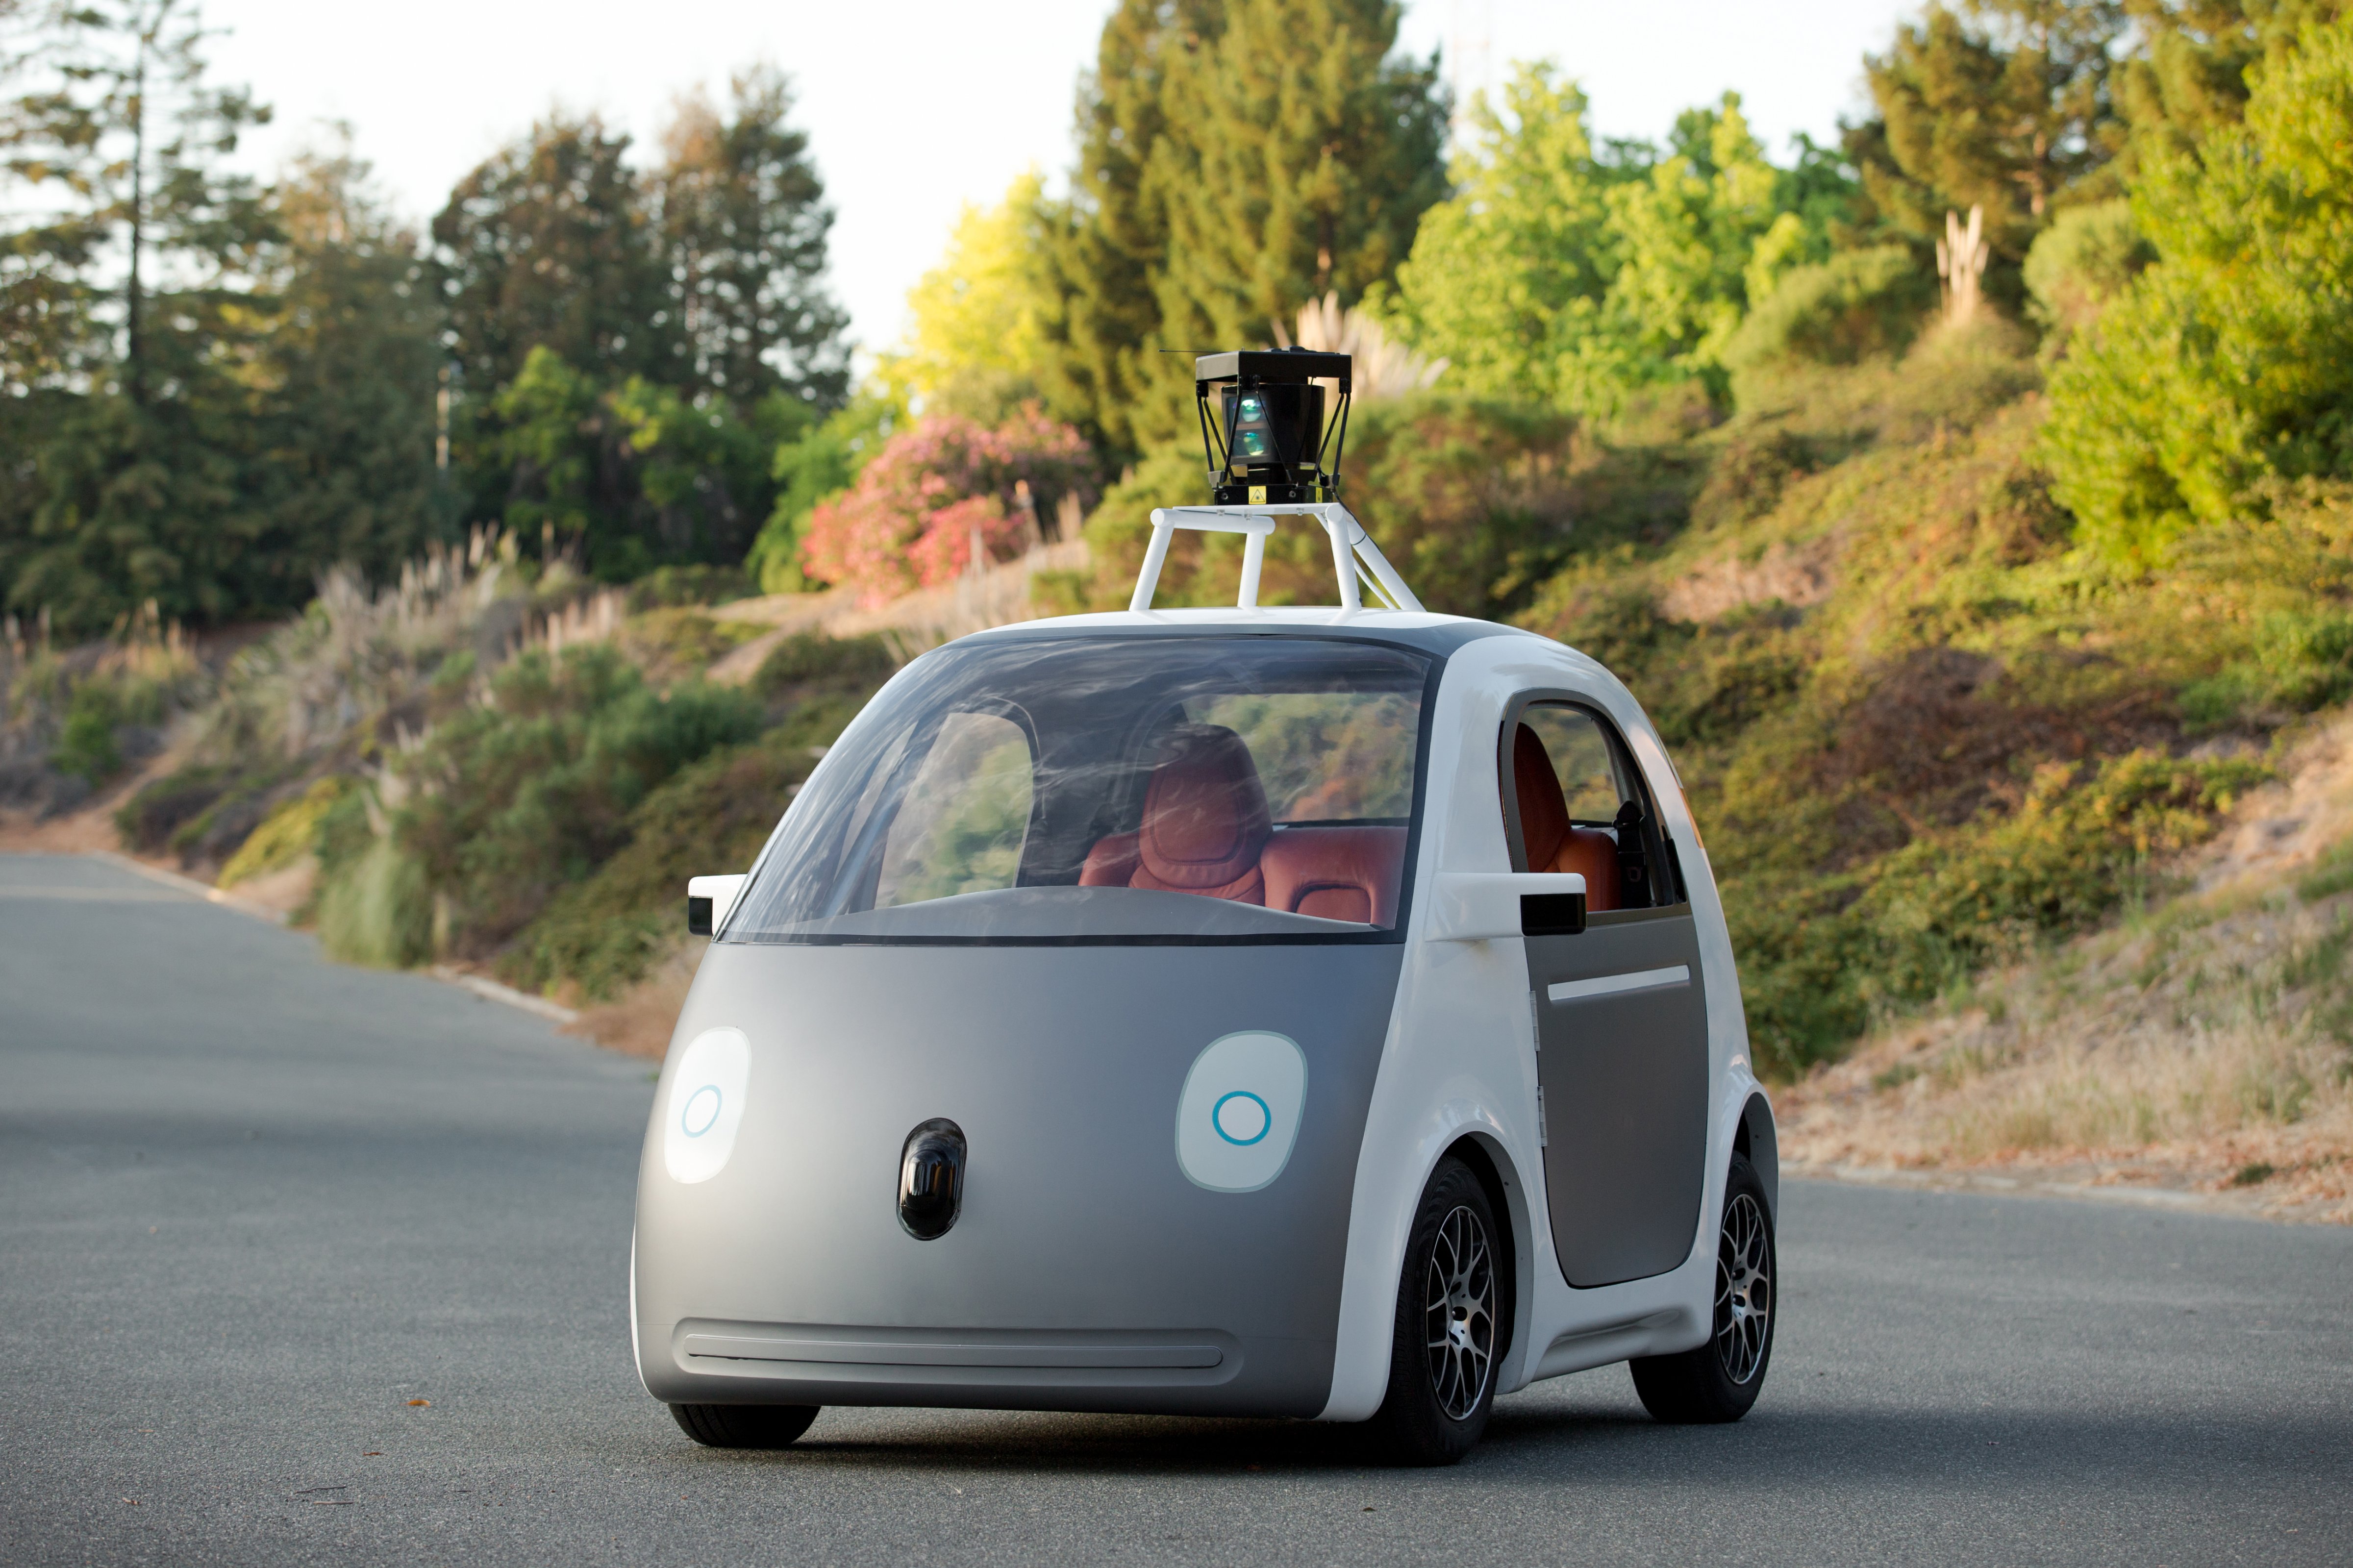 Prototype of Google's self-driving car. (Google)